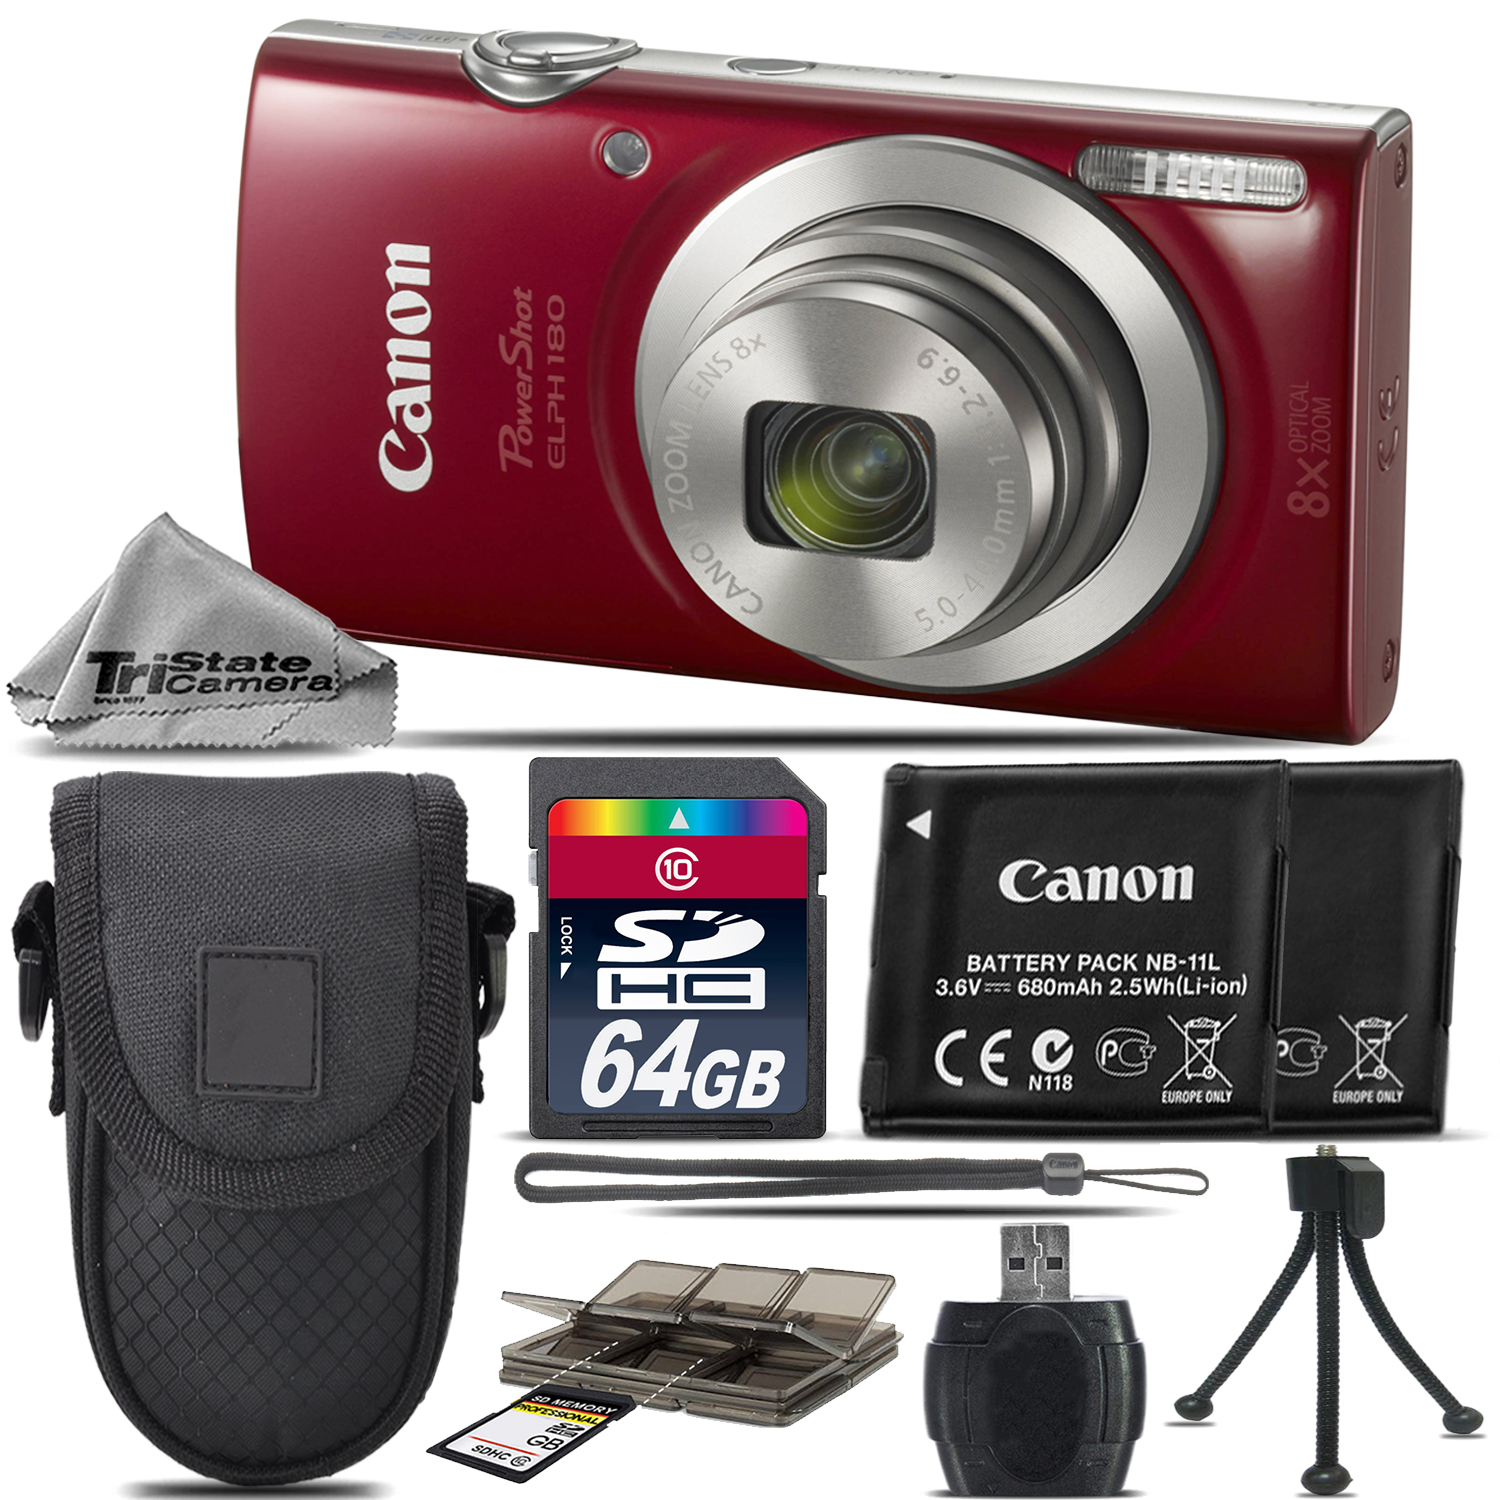 PowerShot ELPH 180 Digital Camera (Red) 1096C001 8X Optical Zoom -64GB Kit *FREE SHIPPING*